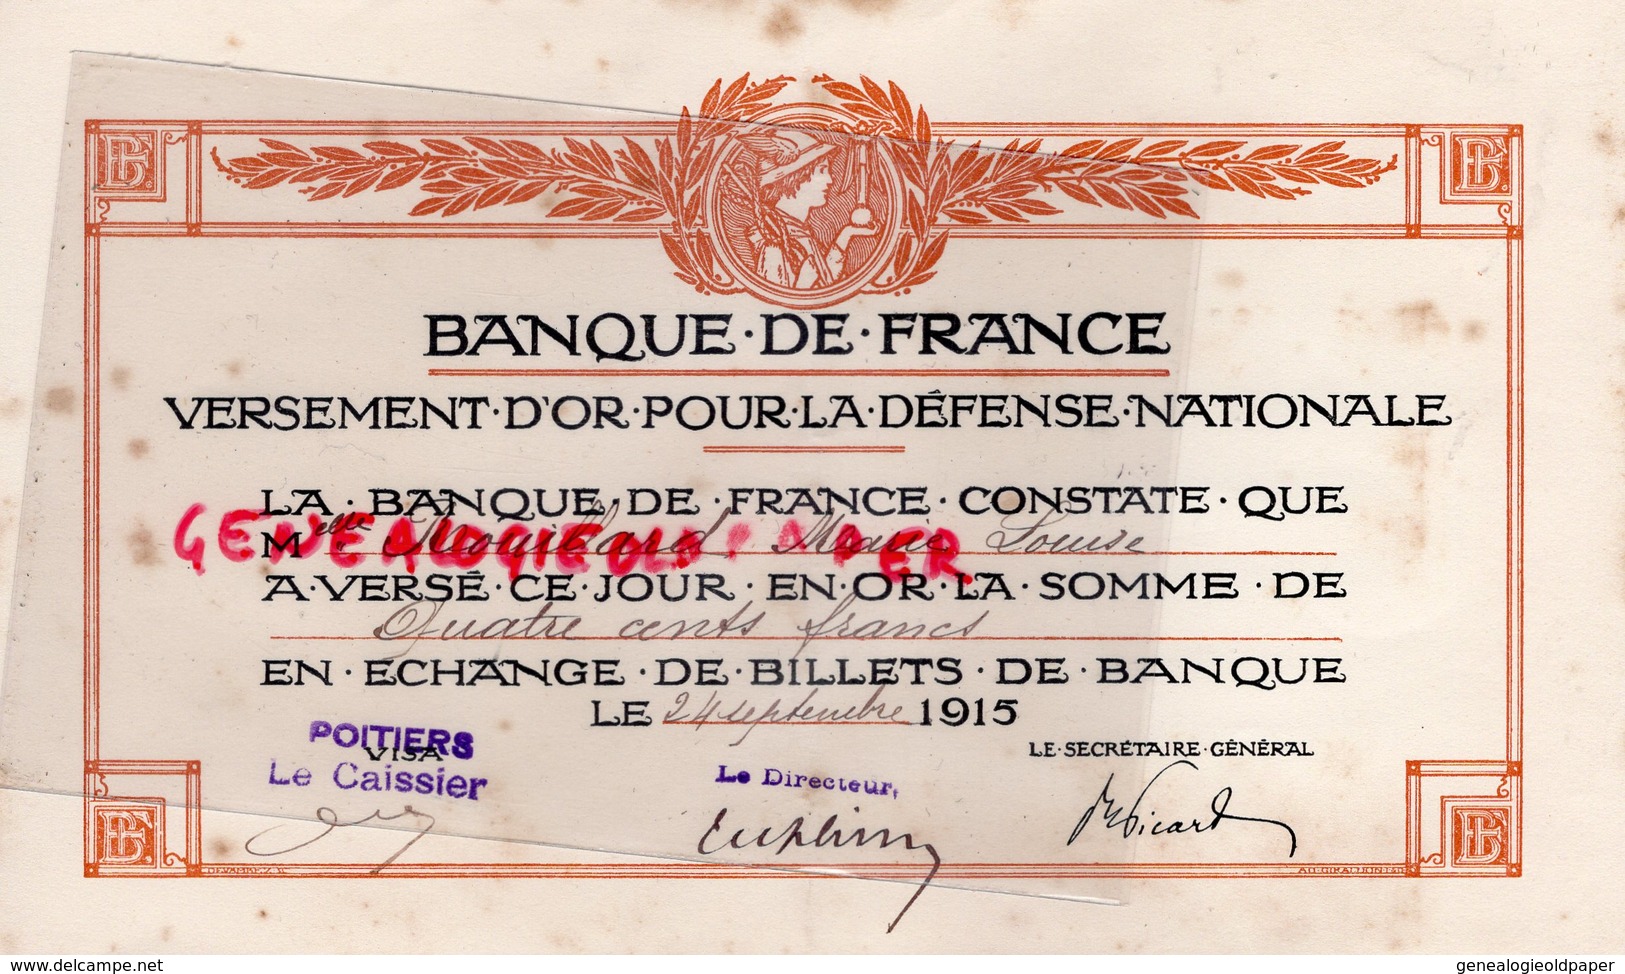 86- POITIERS-- VERSEMENT OR DEFENSE NATIONALE -BANQUE DE FRANCE- 400 CENTS FRANCS- 1915- MARIE LOUISE ROUILLARD - Bank & Versicherung